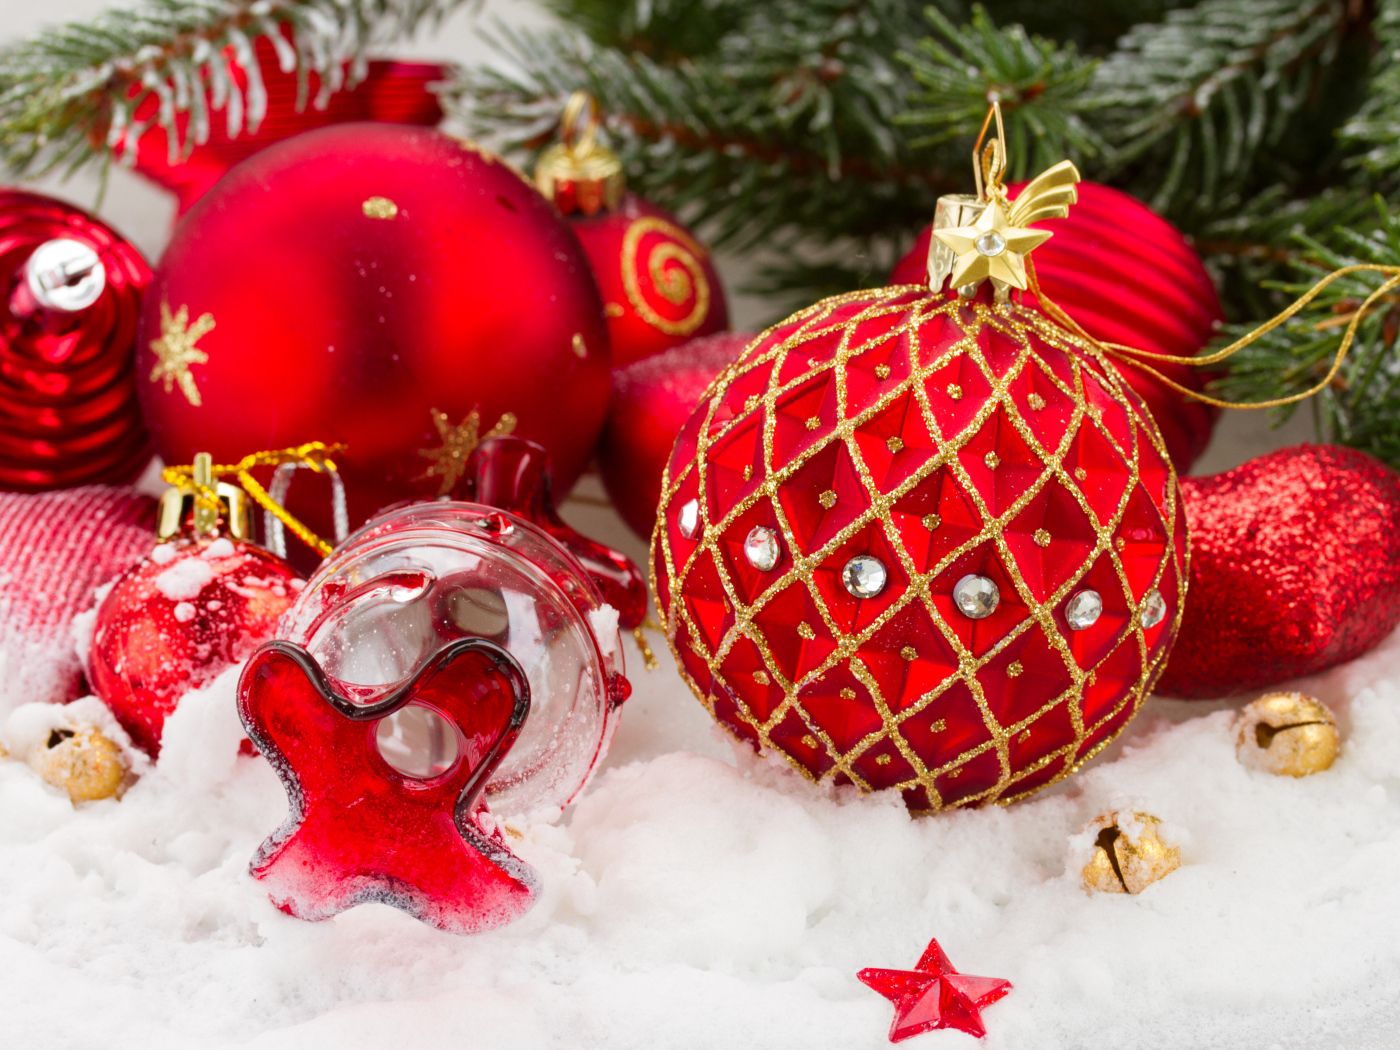 Bright red Christmas balls on a Christmas tree